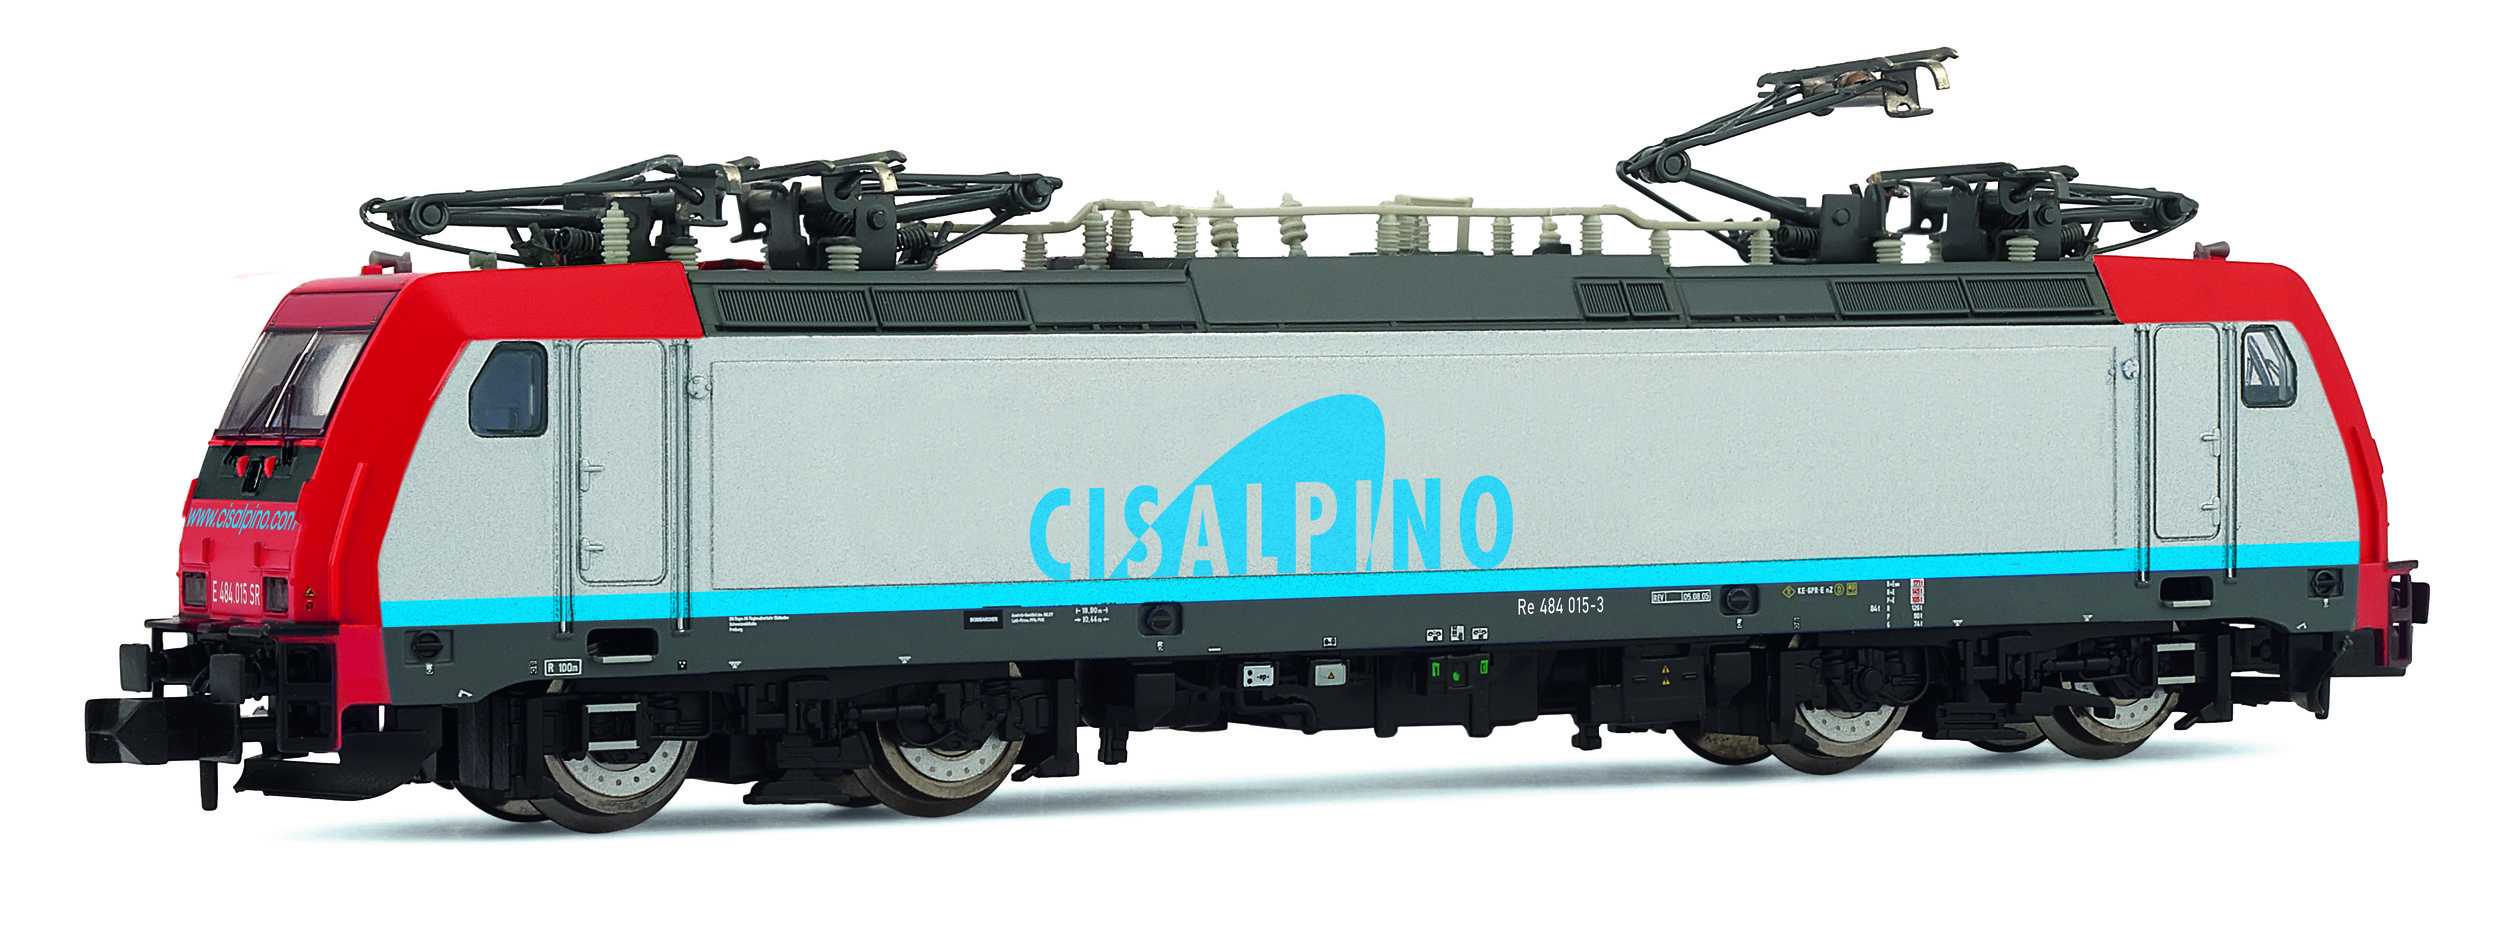 Trains miniatures : locomotives et autorail - Train Cisalpino EuroCit